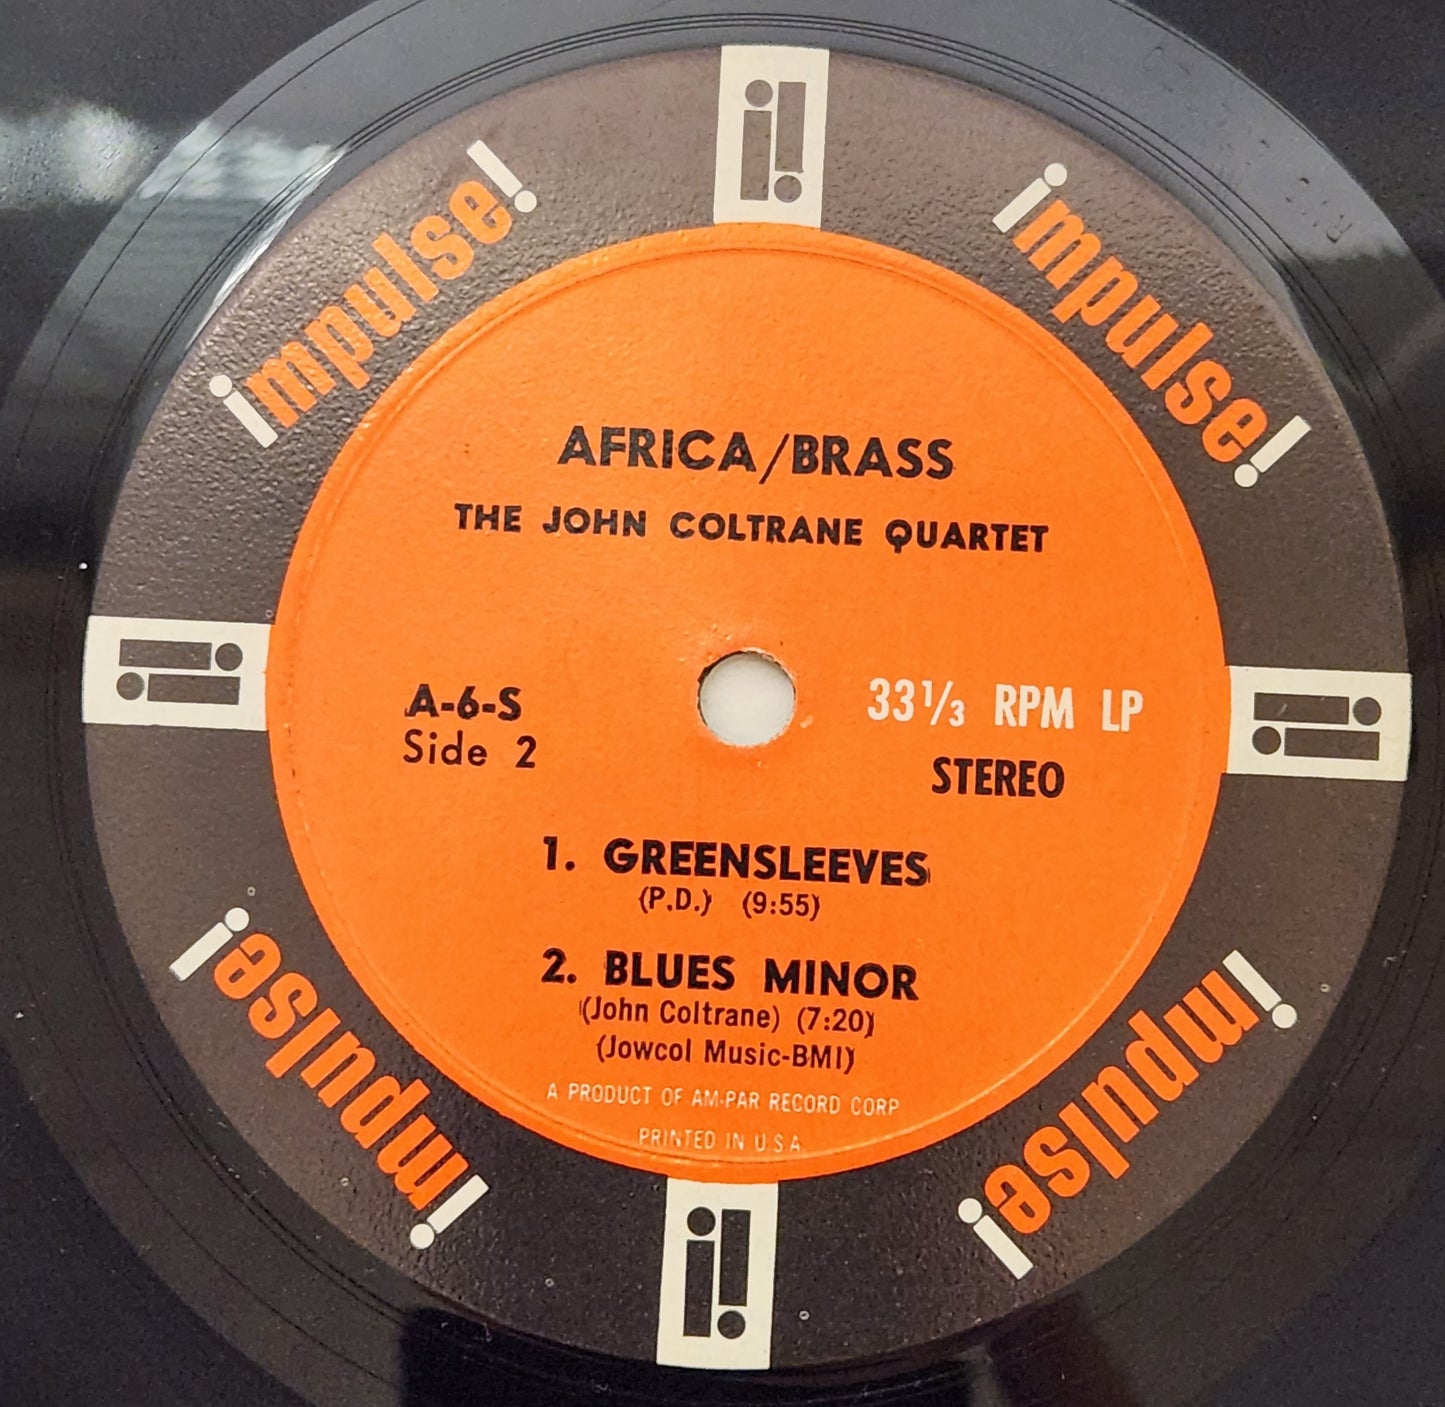 The John Coltrane Quartet "Africa / Brass" 1961 1st Pressing Jazz Record Album